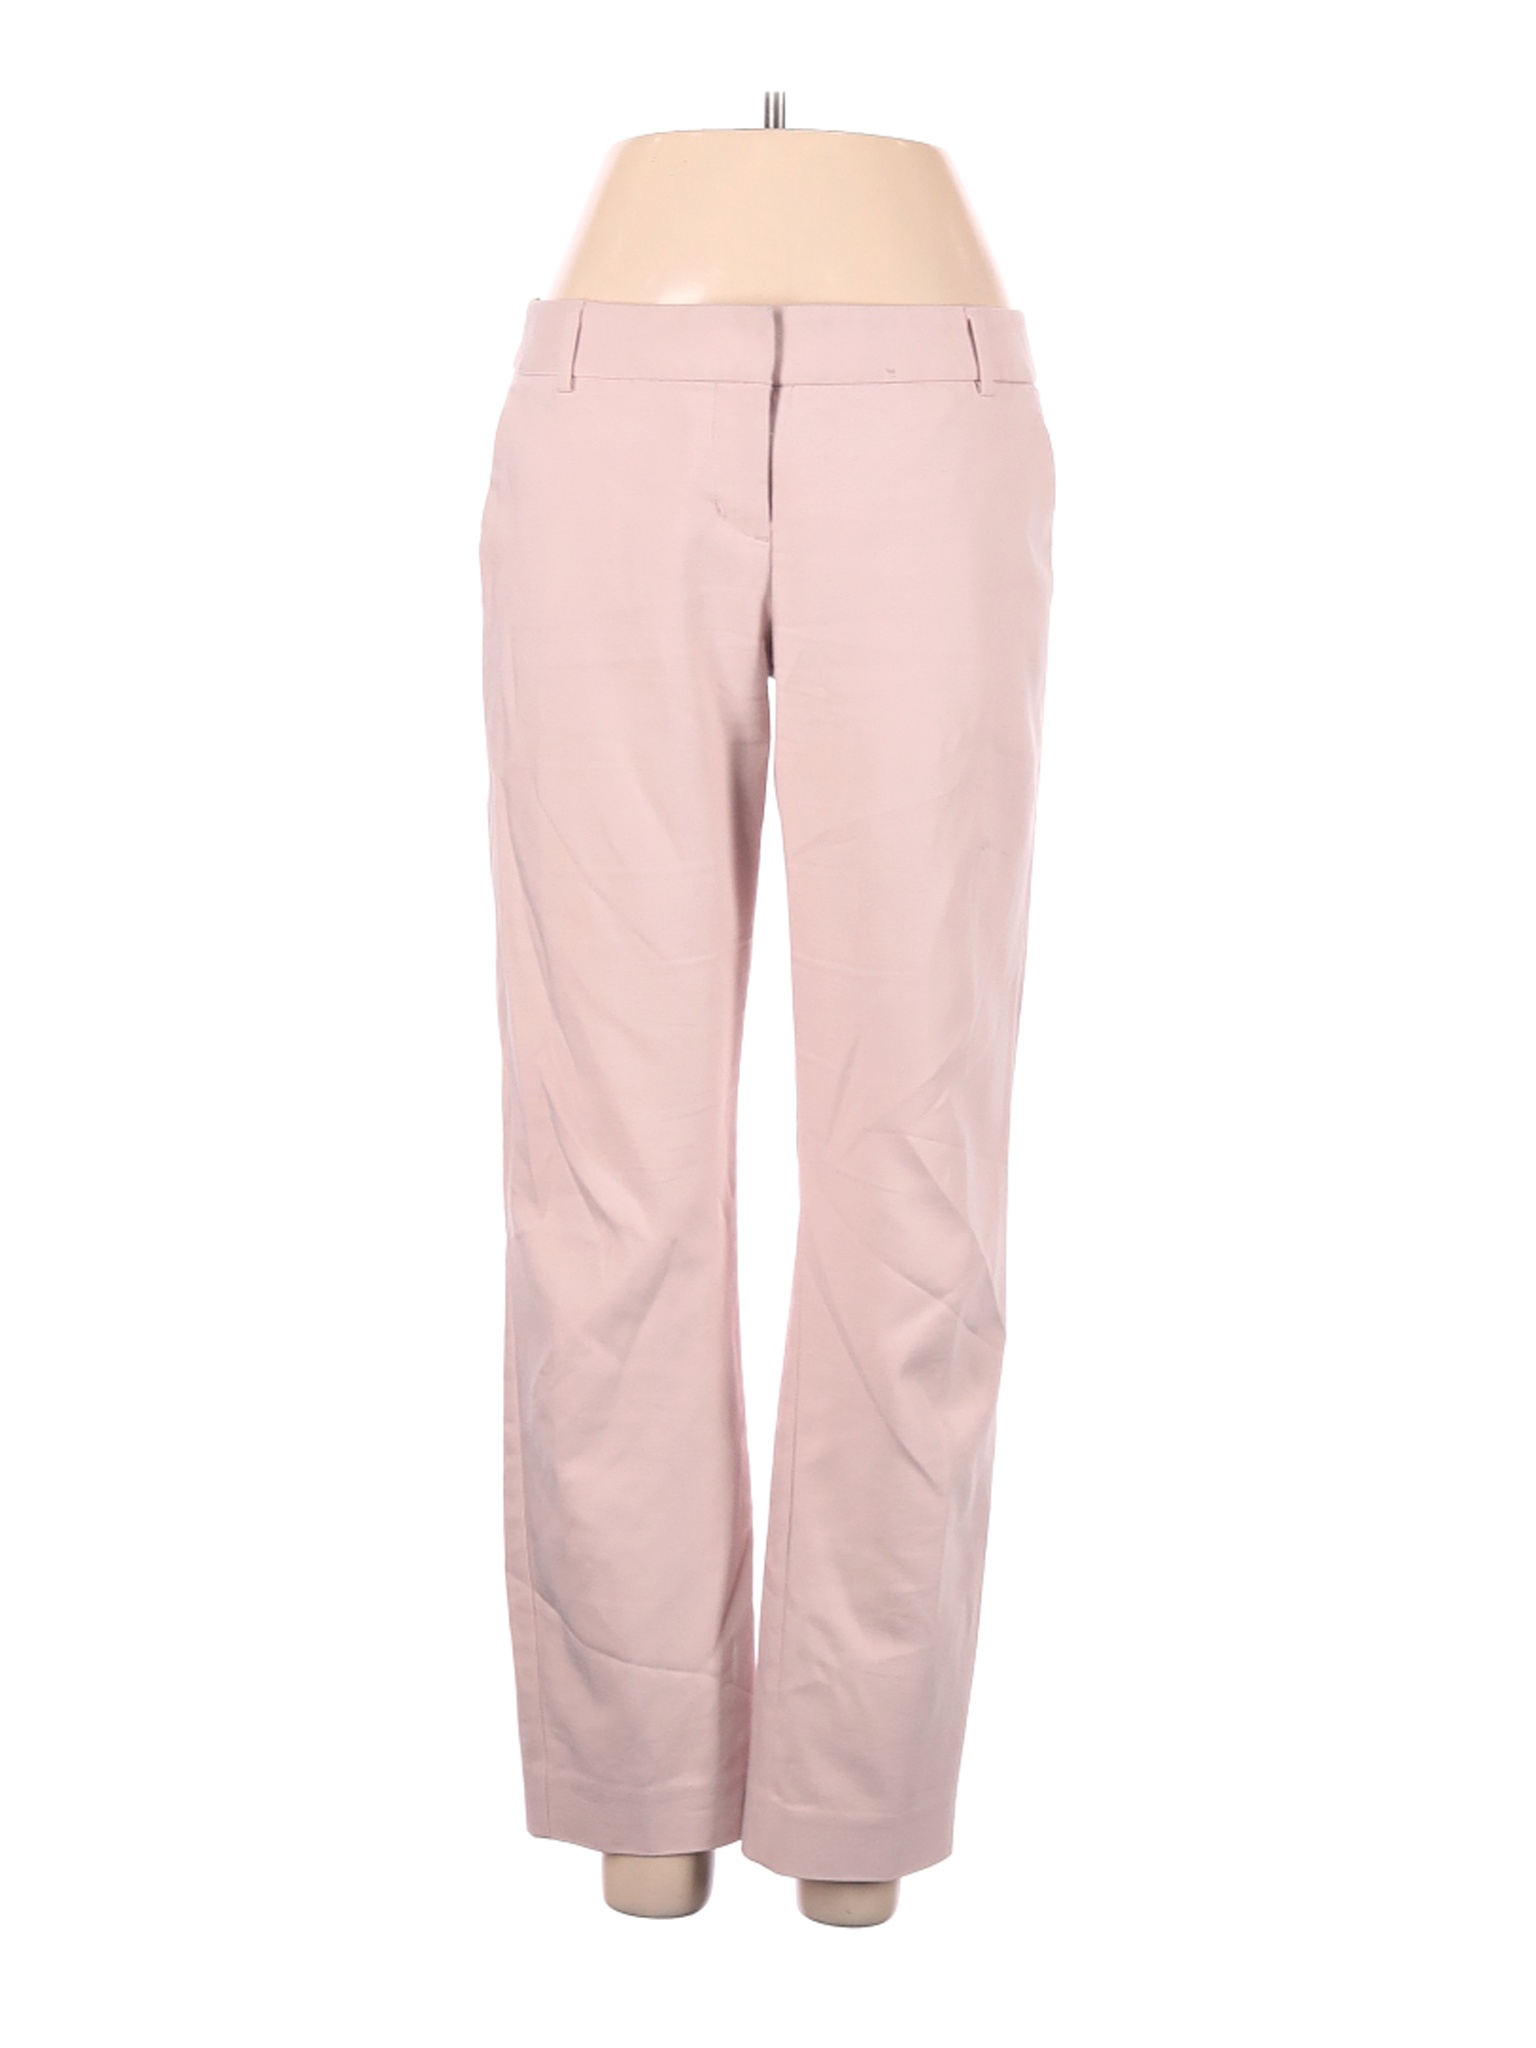 Express Women Pink Dress Pants 4 | eBay